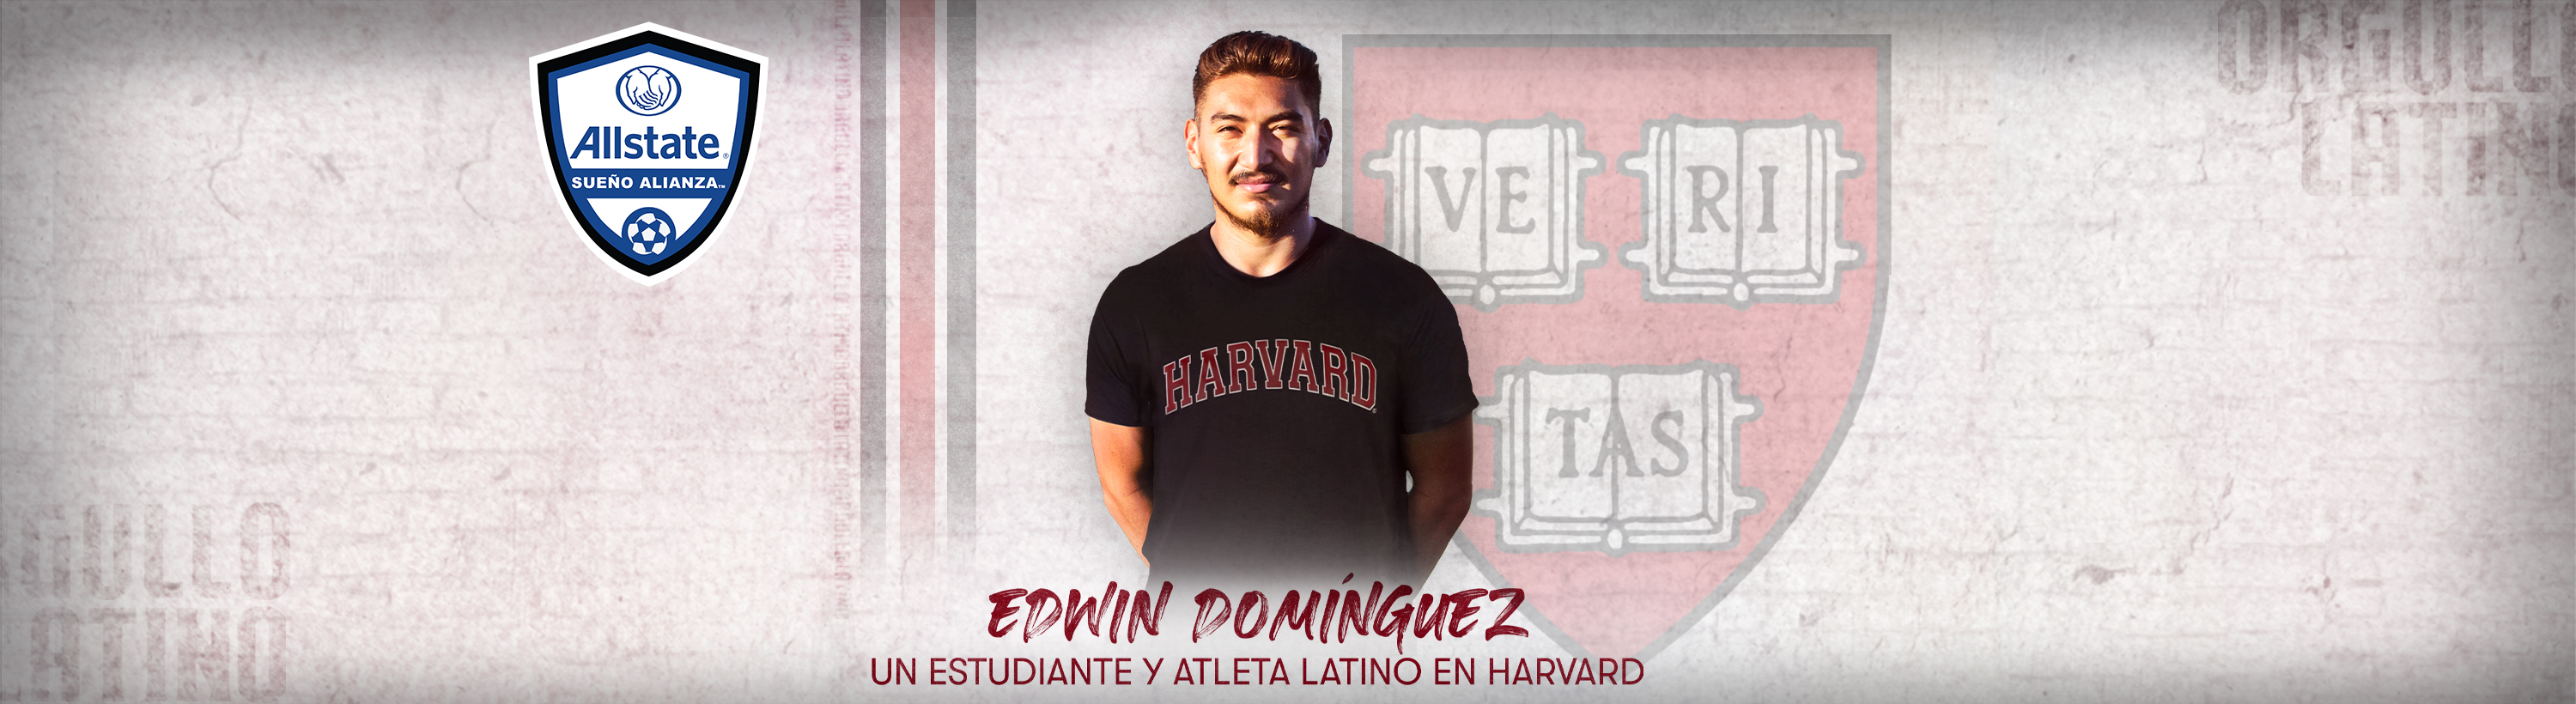 Edwin Dominguez: Talento Latino en Harvard